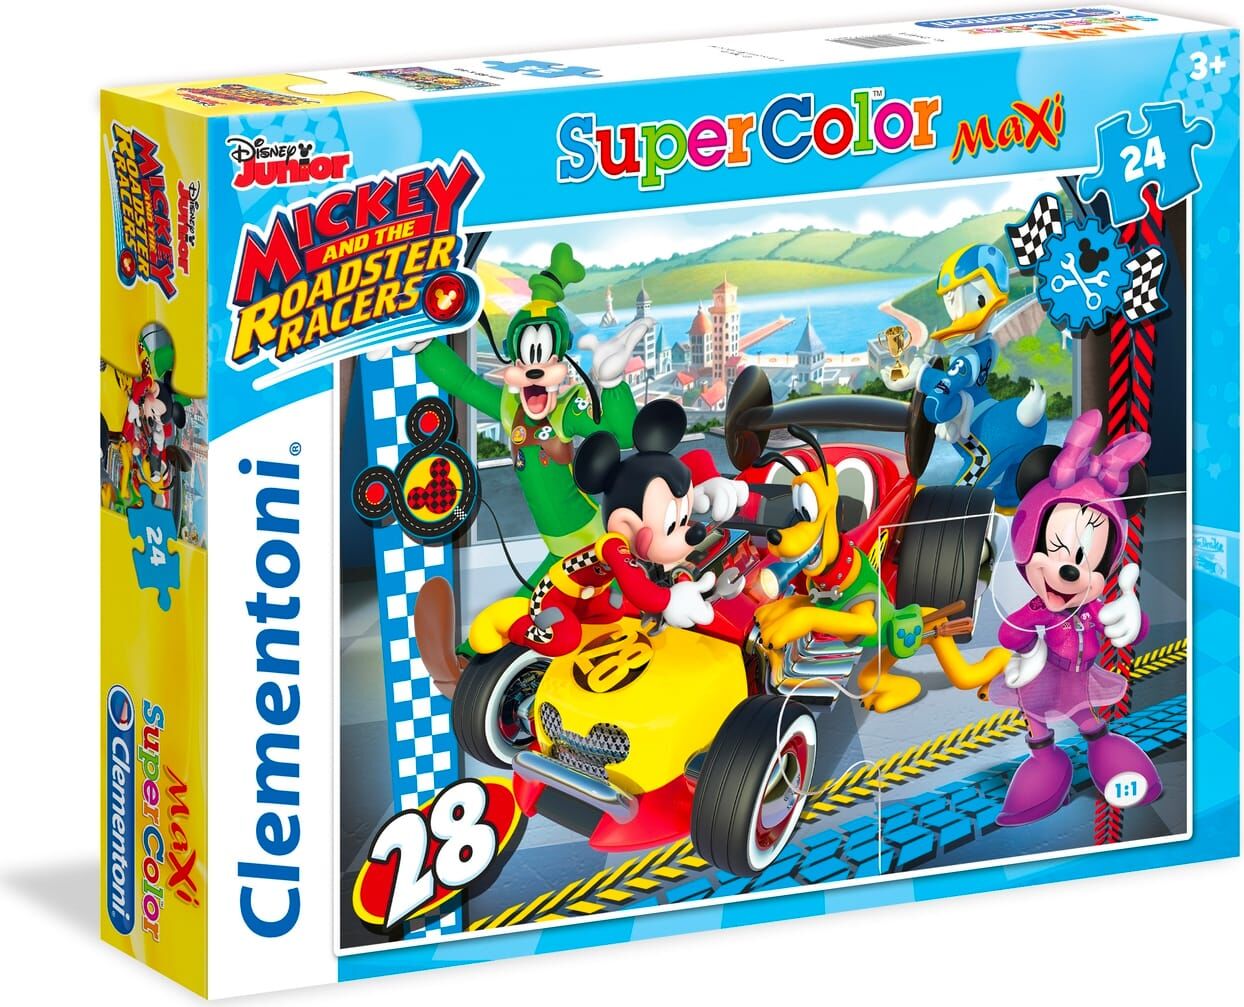 clementoni 24481 Mickey Roadster Racers - 24481